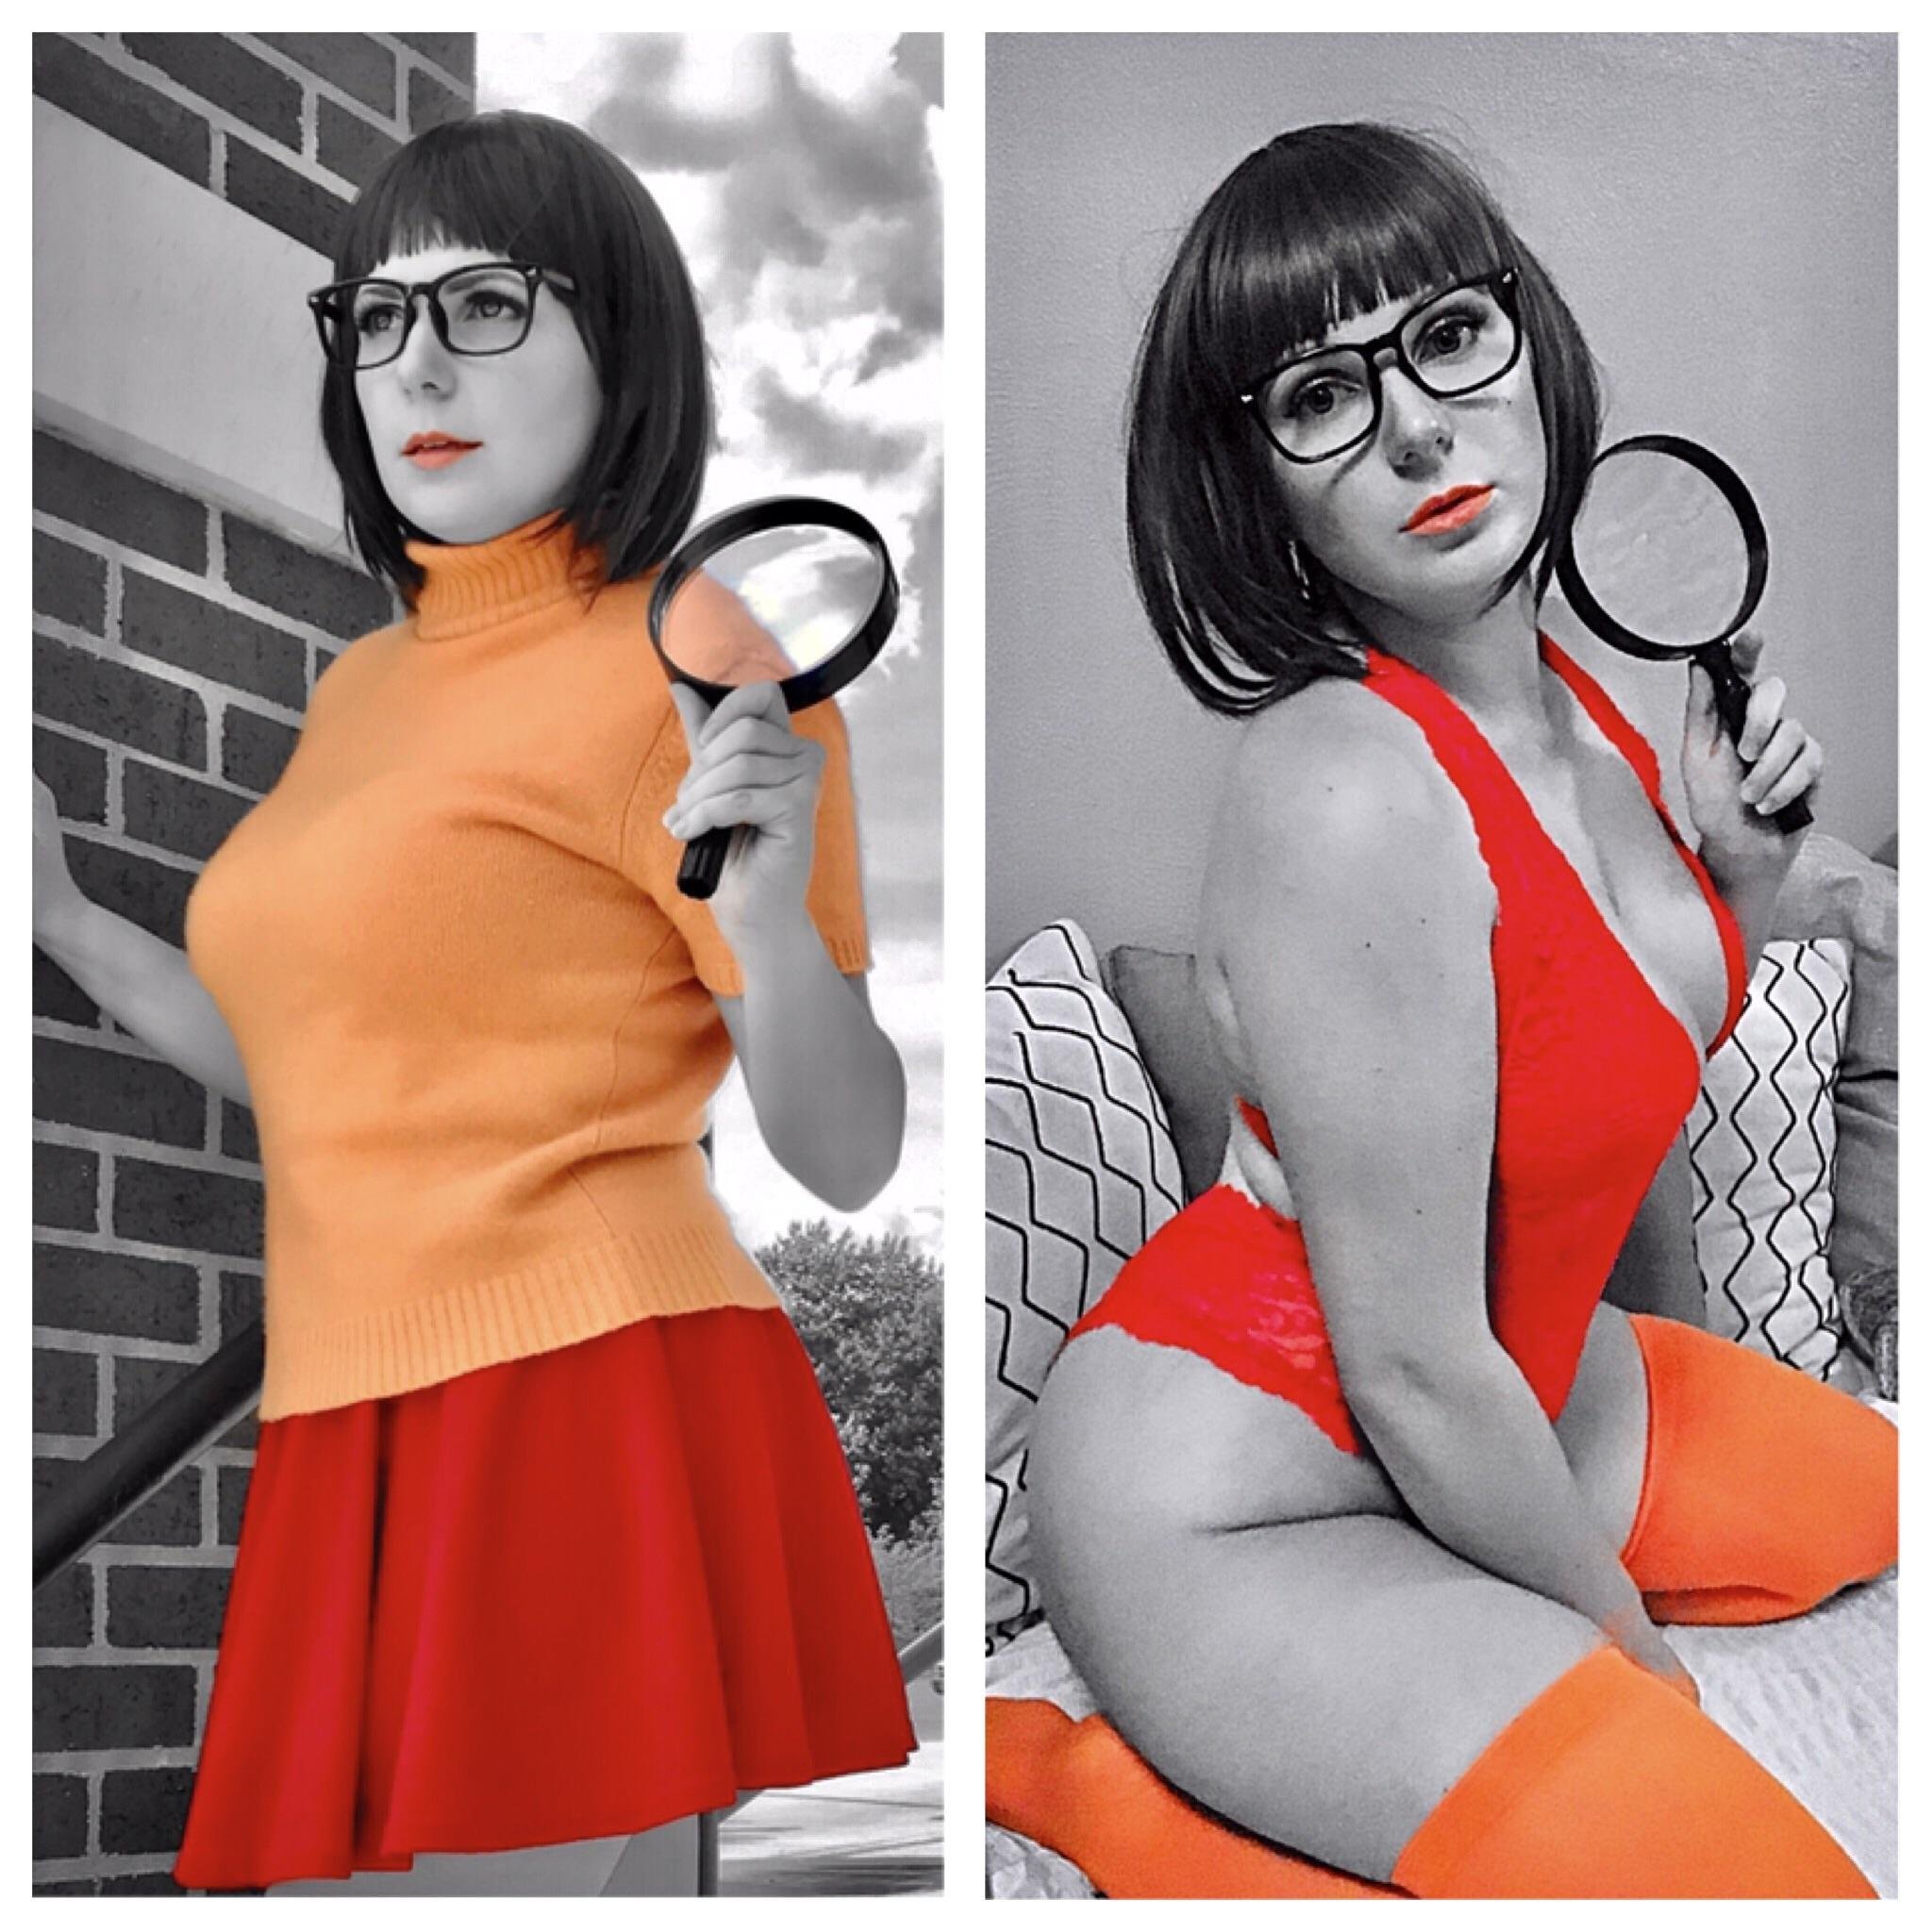 Velma Cosplay by Nikki Kole